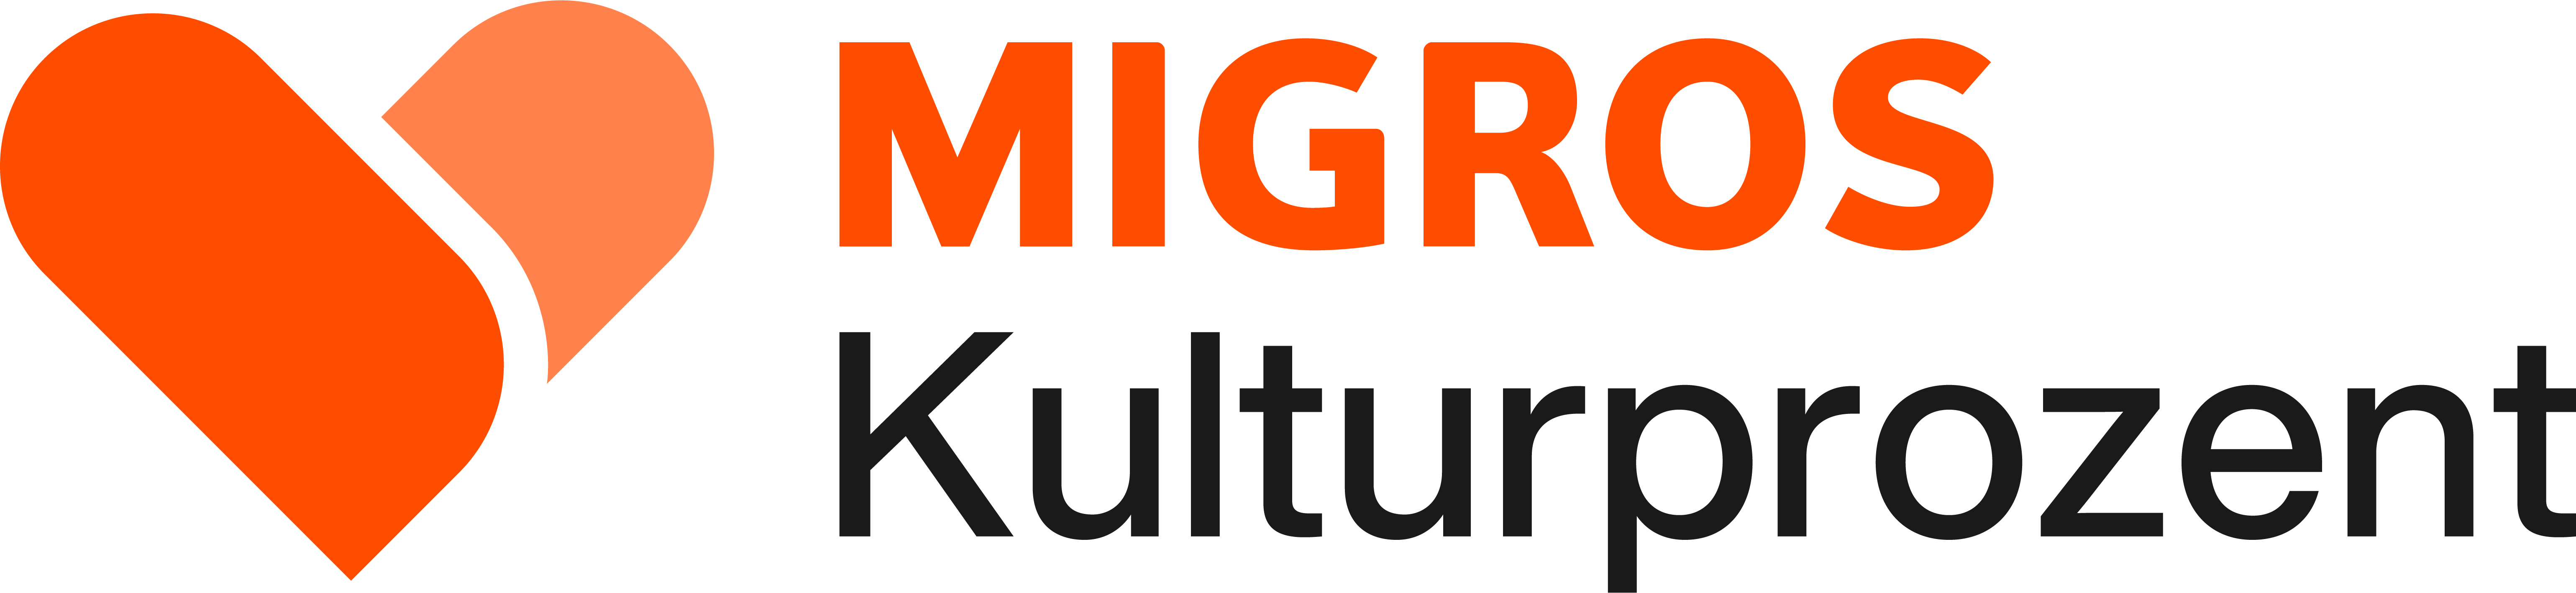 logo-migros-kulturprozent-cmyk-300dpi-dejpg